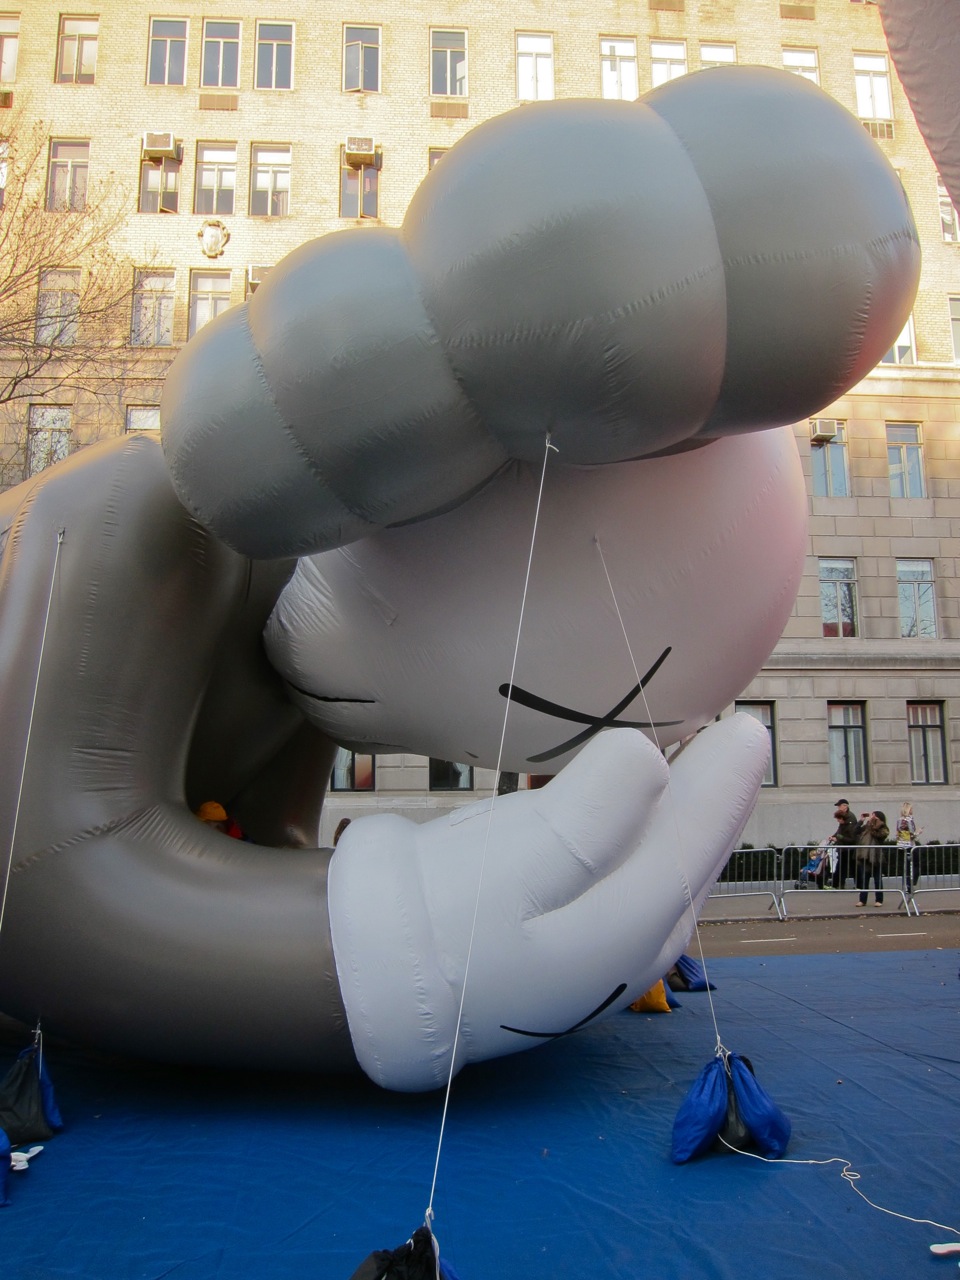 Macys Thanksgiving parade balloon inflation AM 15